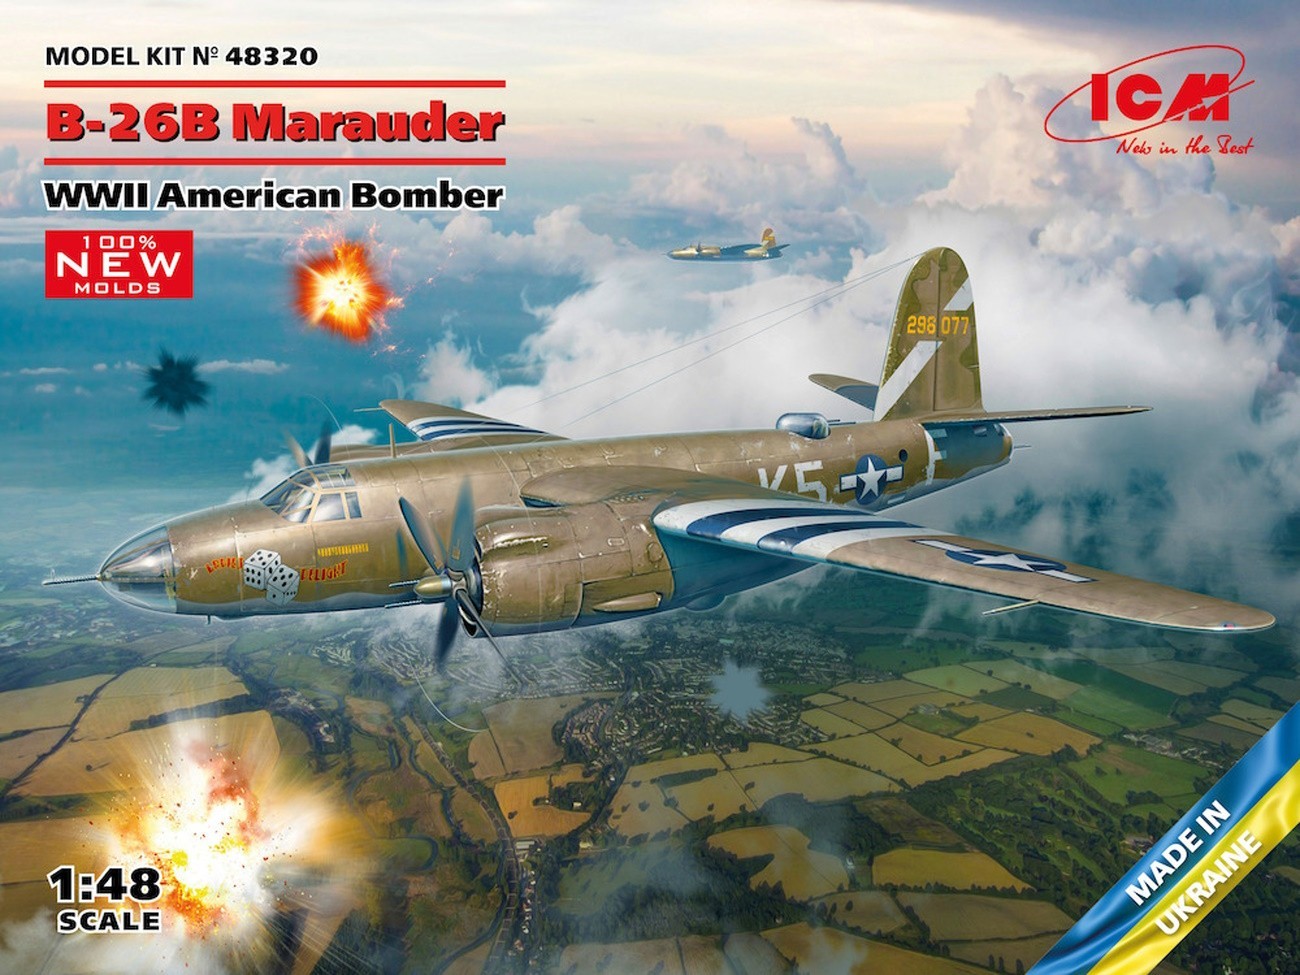 1:48 ICM B-26B Marauder, WWII American Bomber (100% new molds)